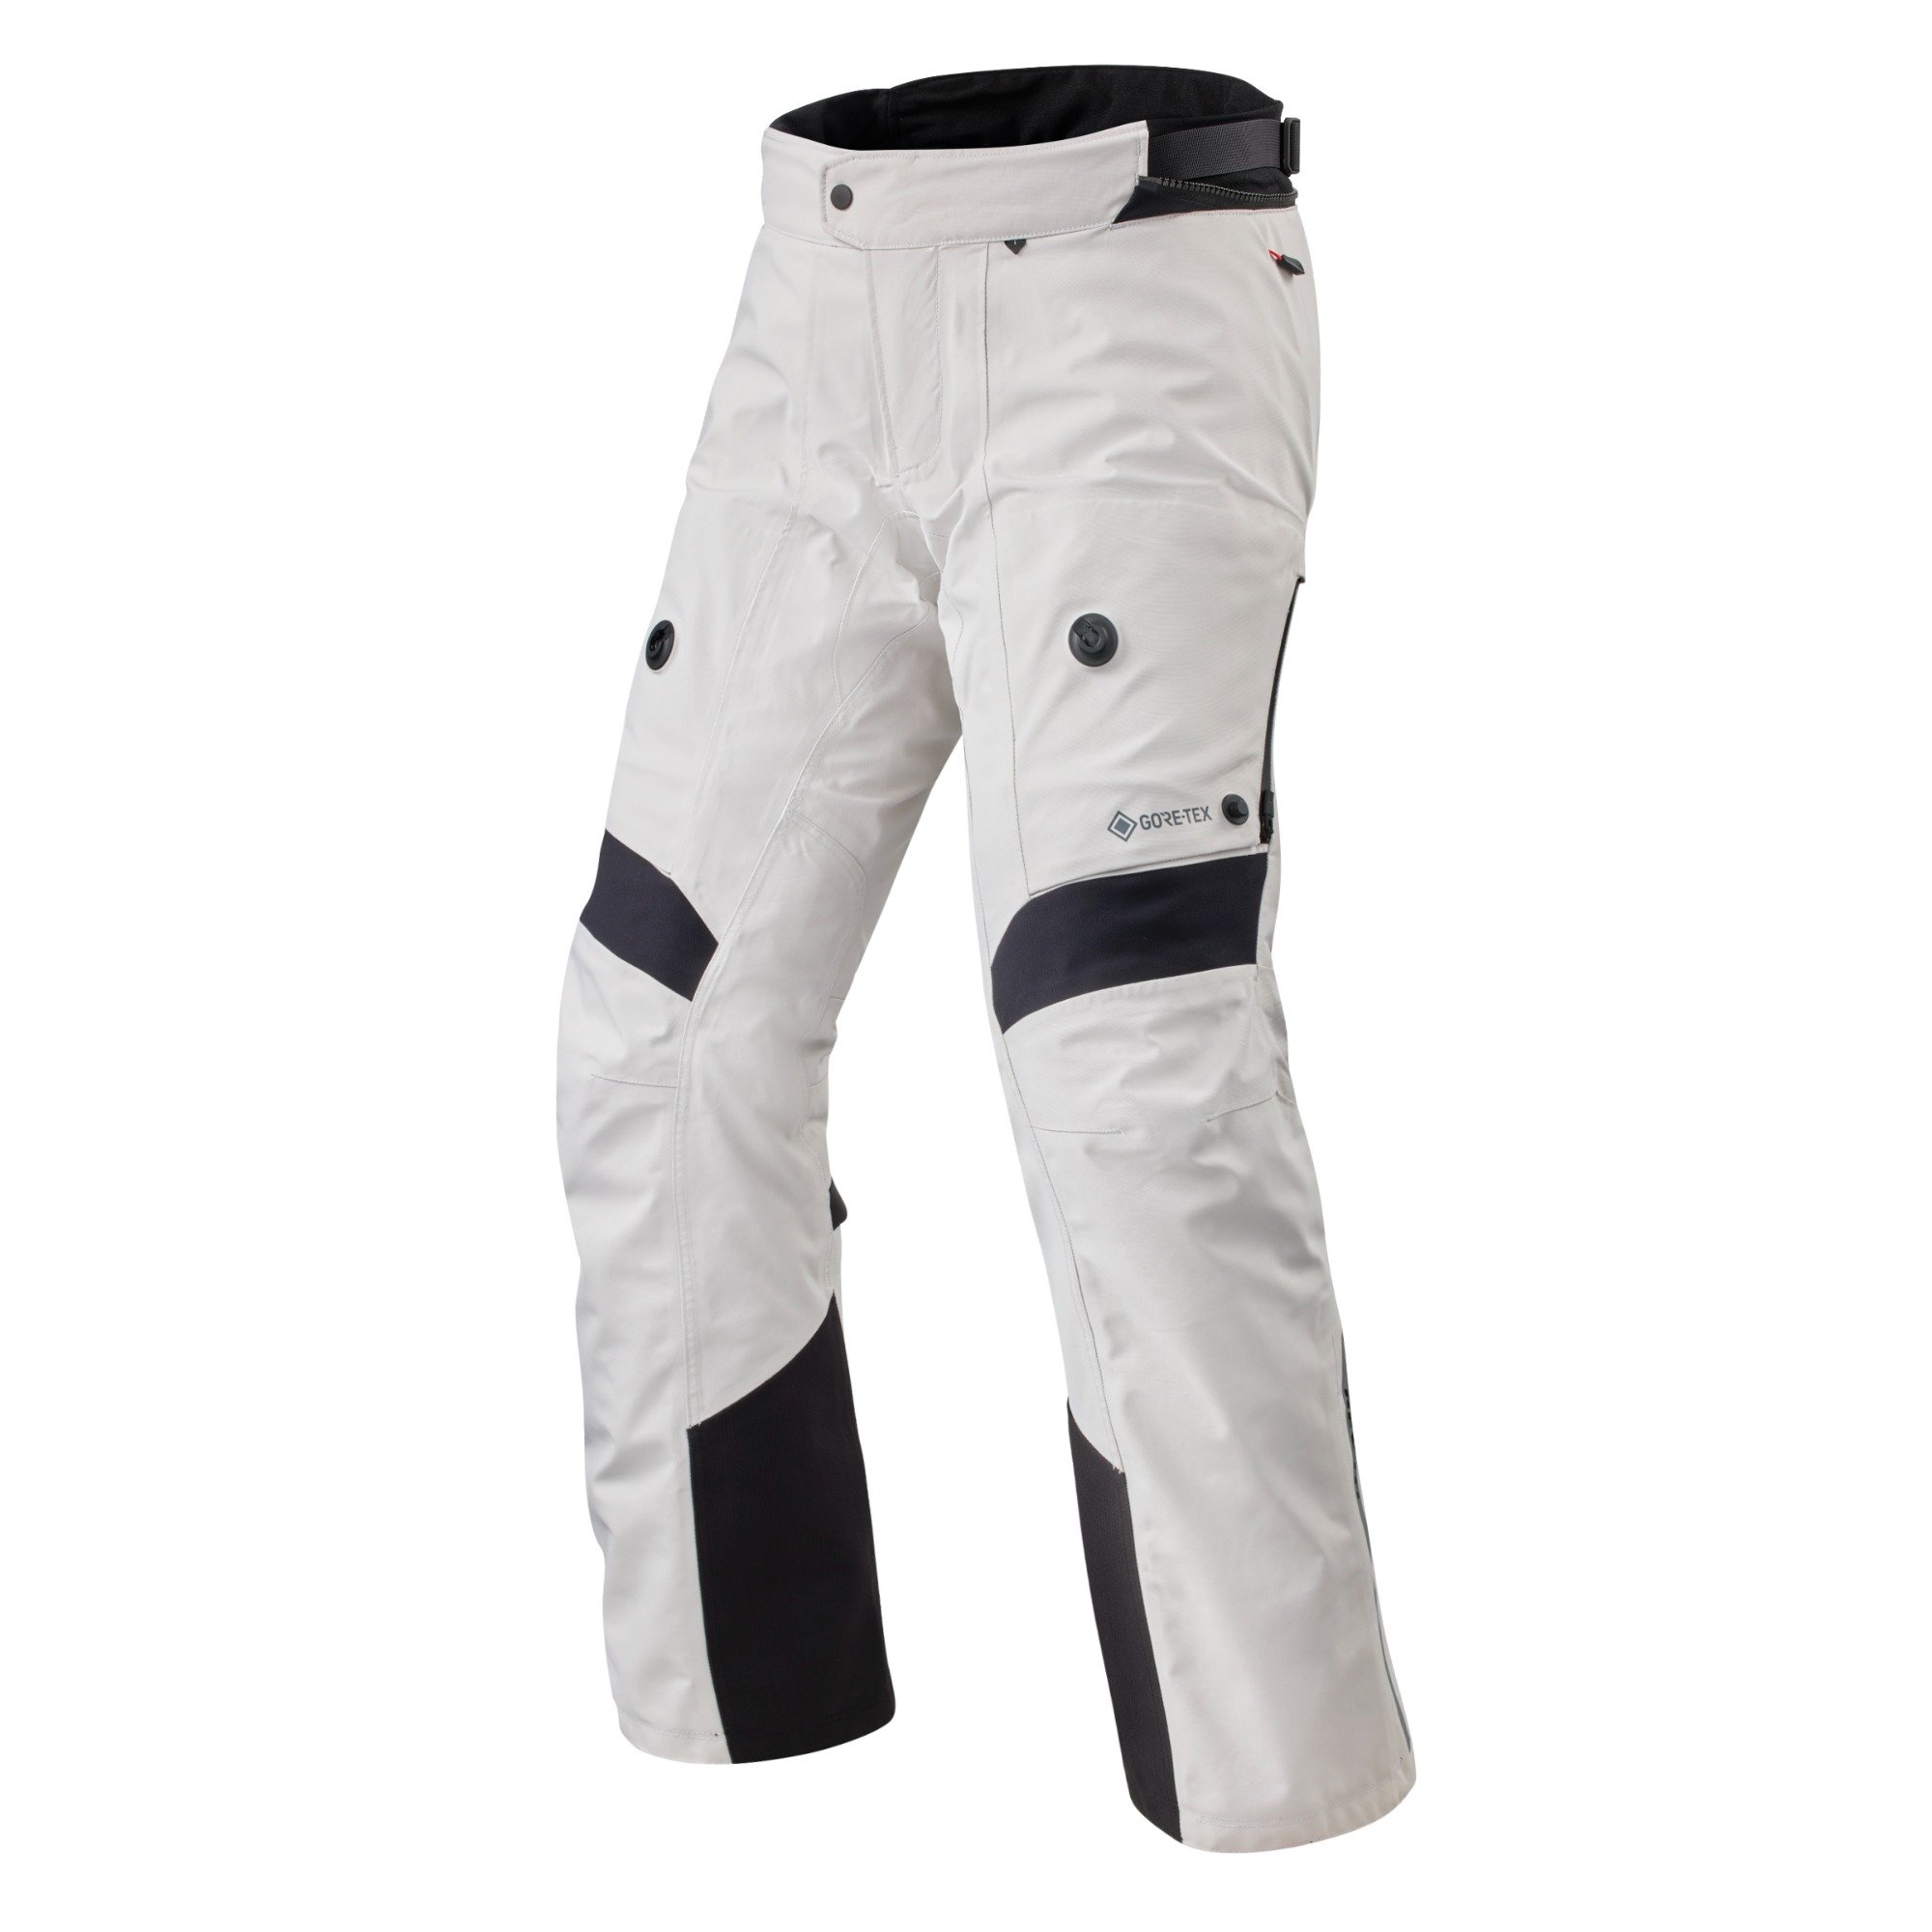 Image of REV'IT! Pants Poseidon 3 GTX Silver Black Standard Motorcycle Pants Size 2XL ID 8700001362627